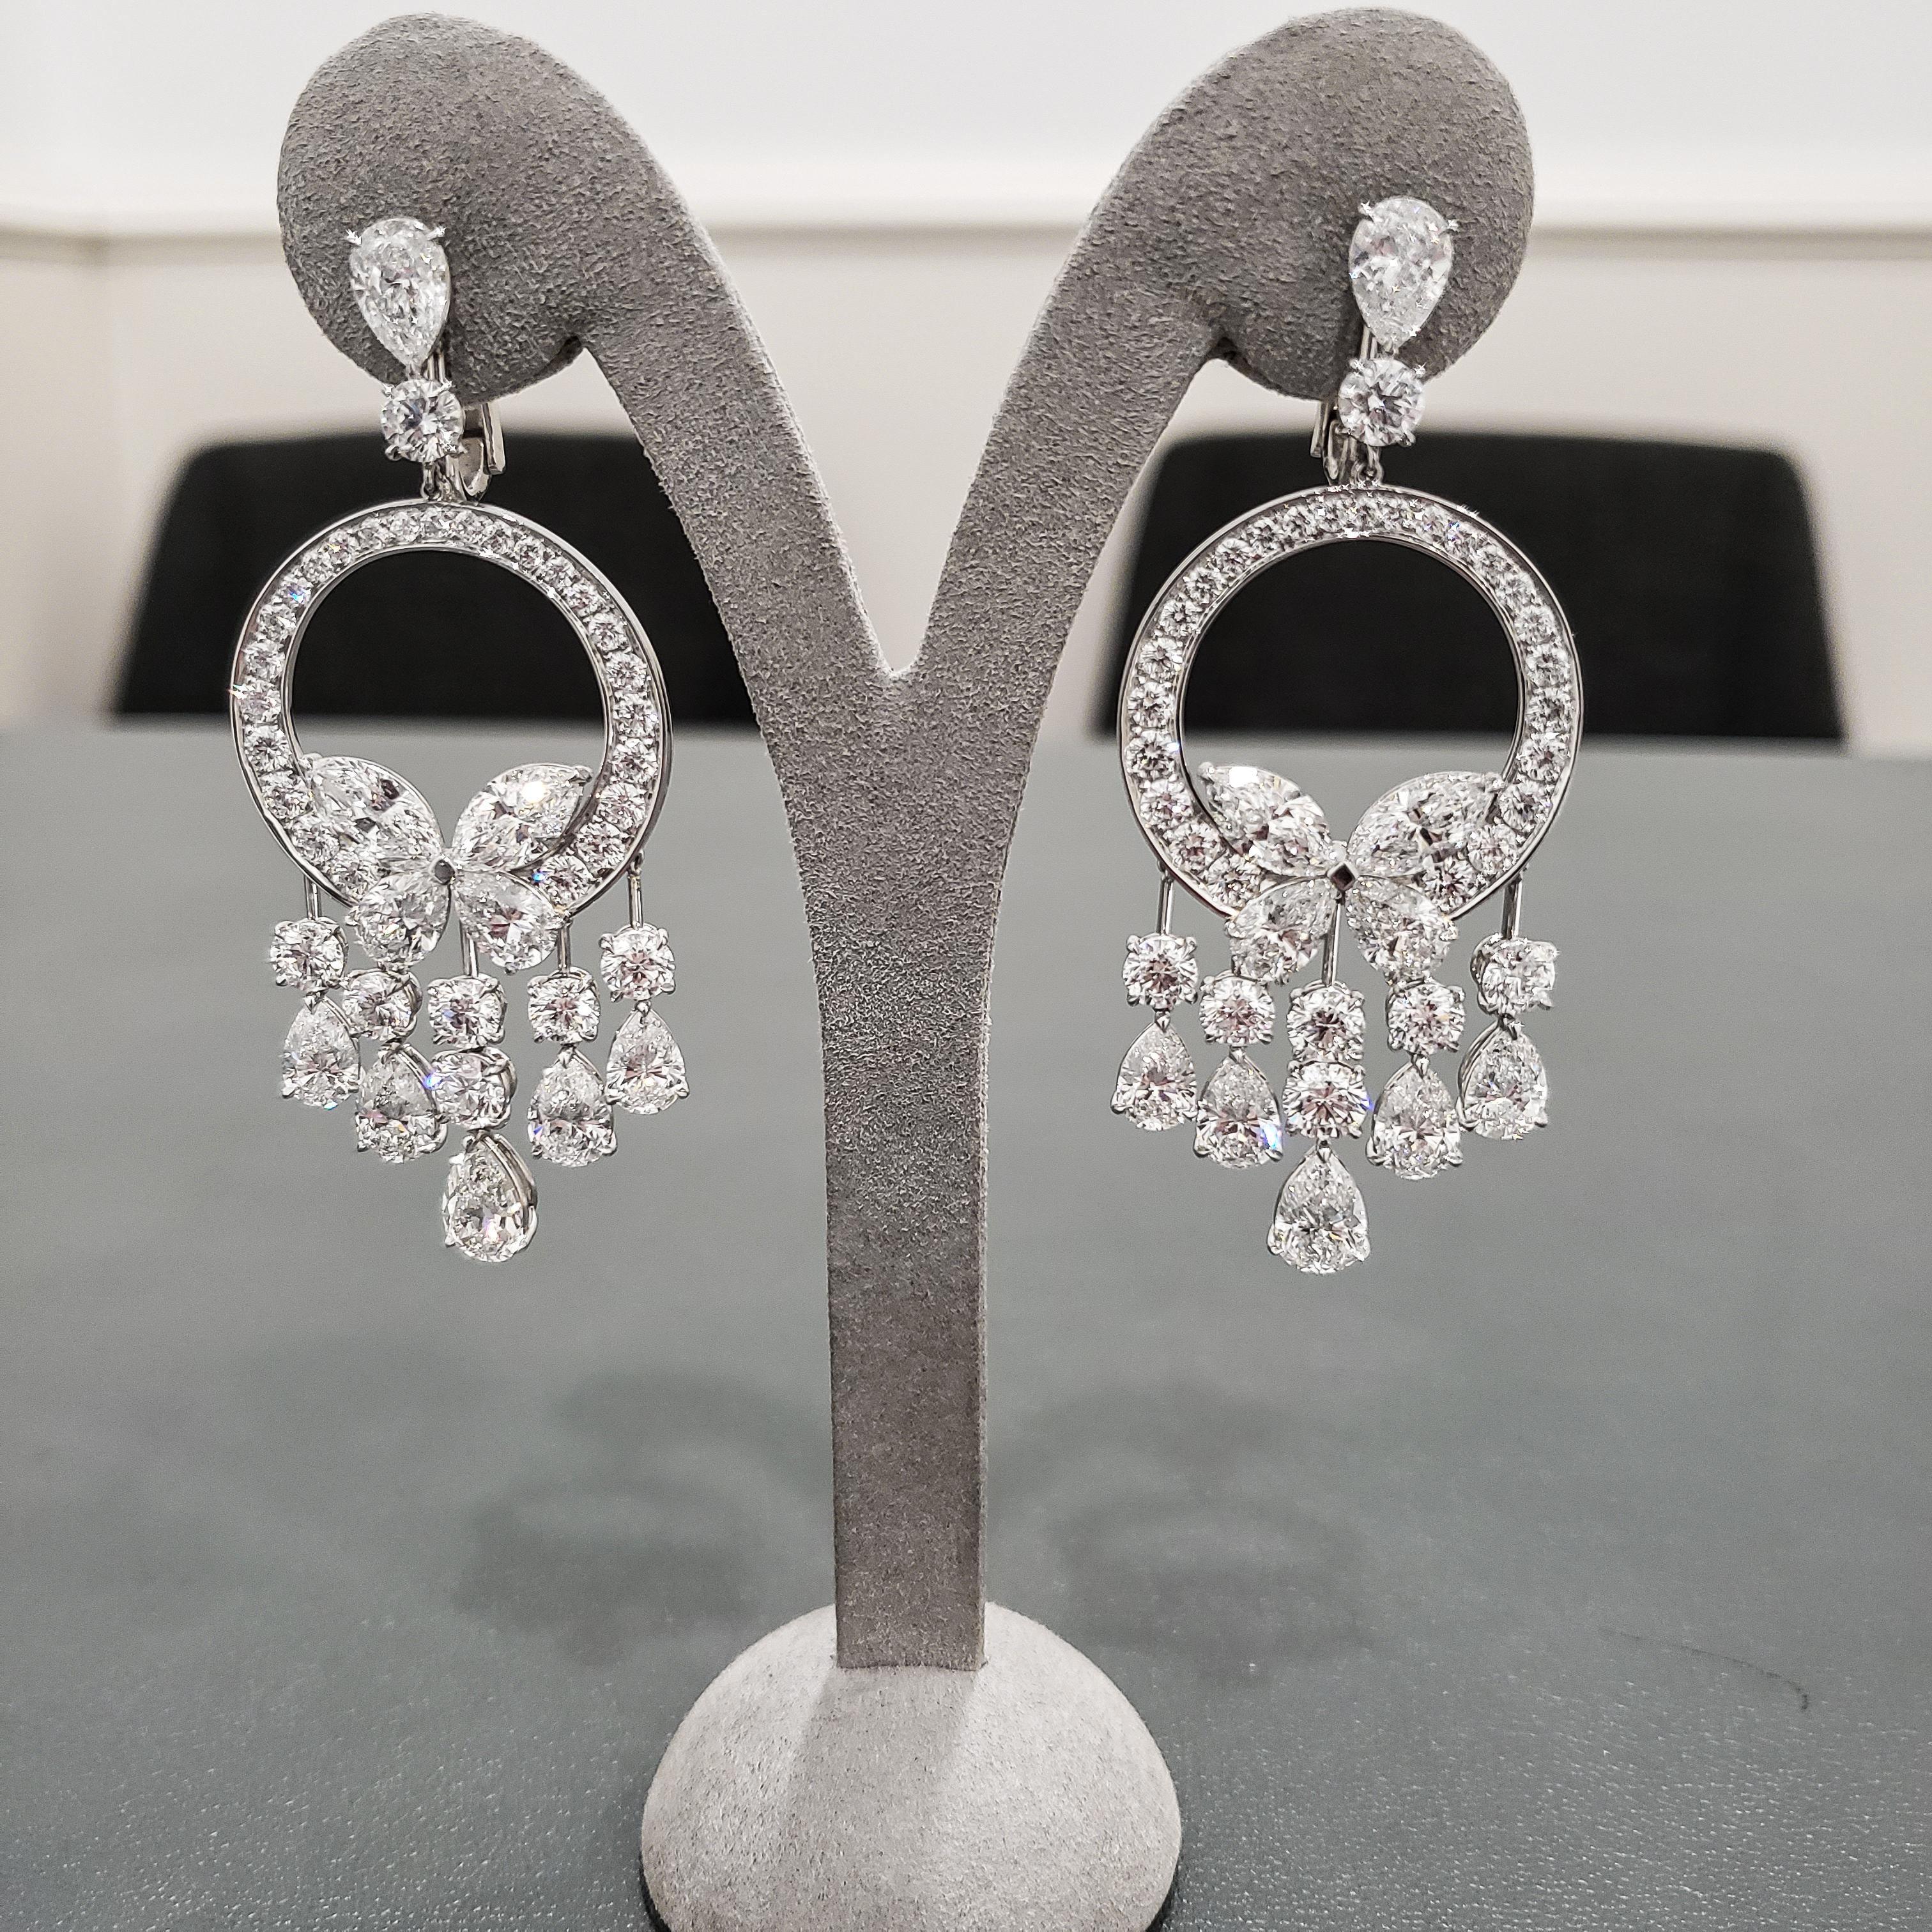 28.19 Carat Total Mixed Cut Diamond Open Work Chandelier Earrings in Platinum For Sale 1